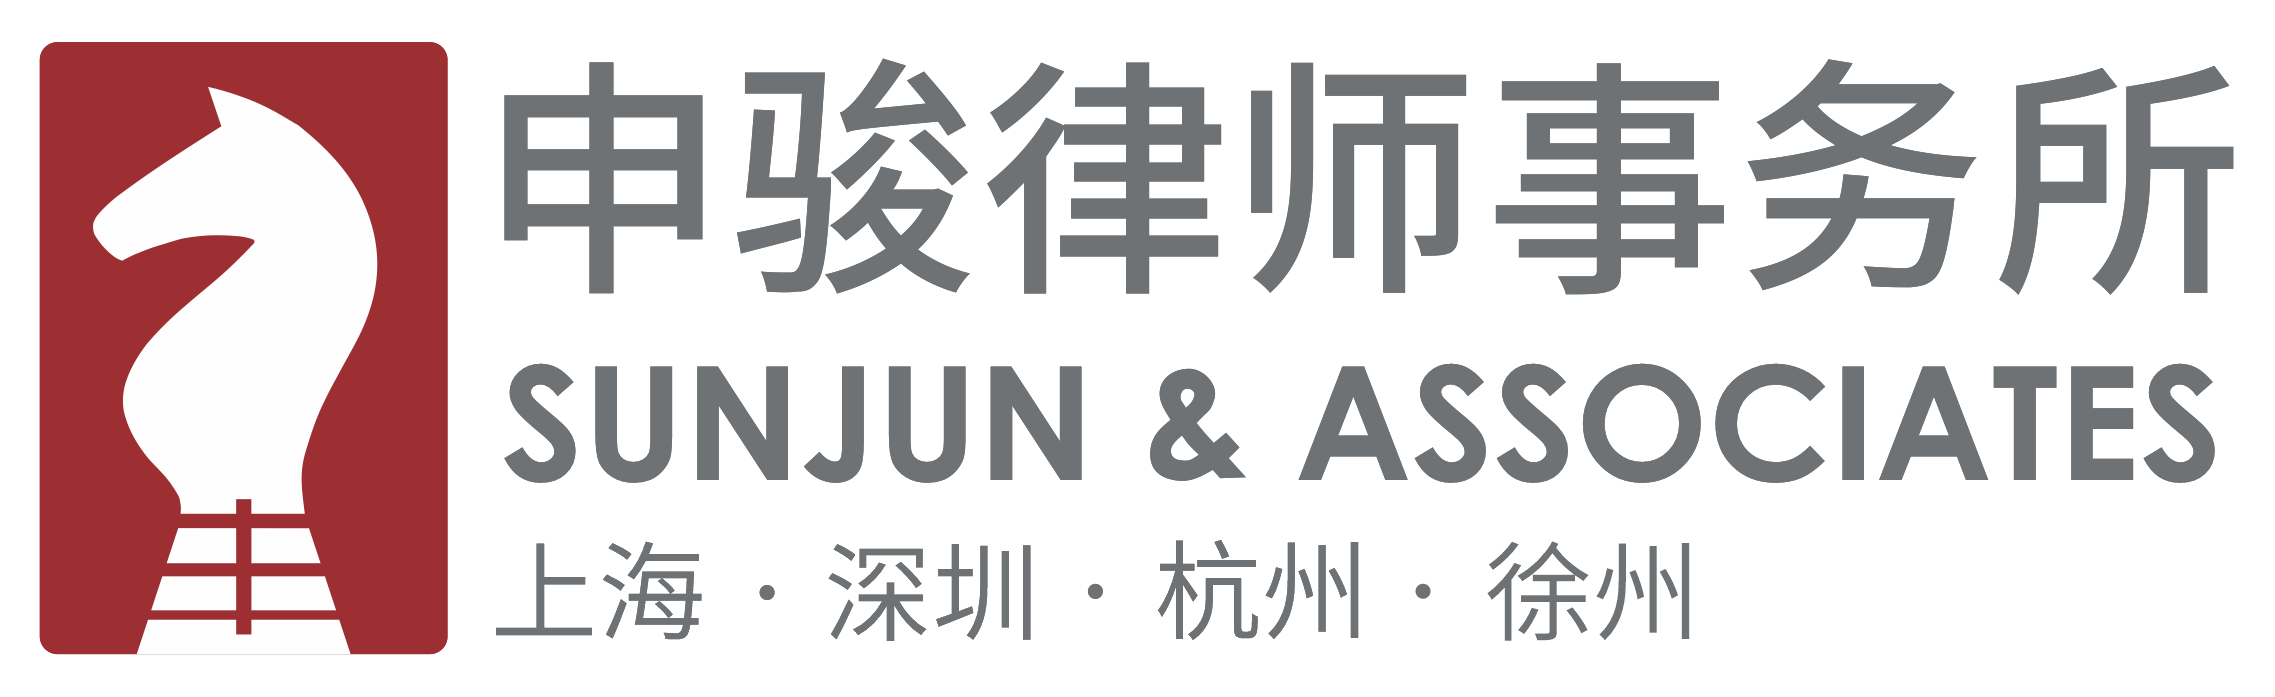 SunJun & Associates